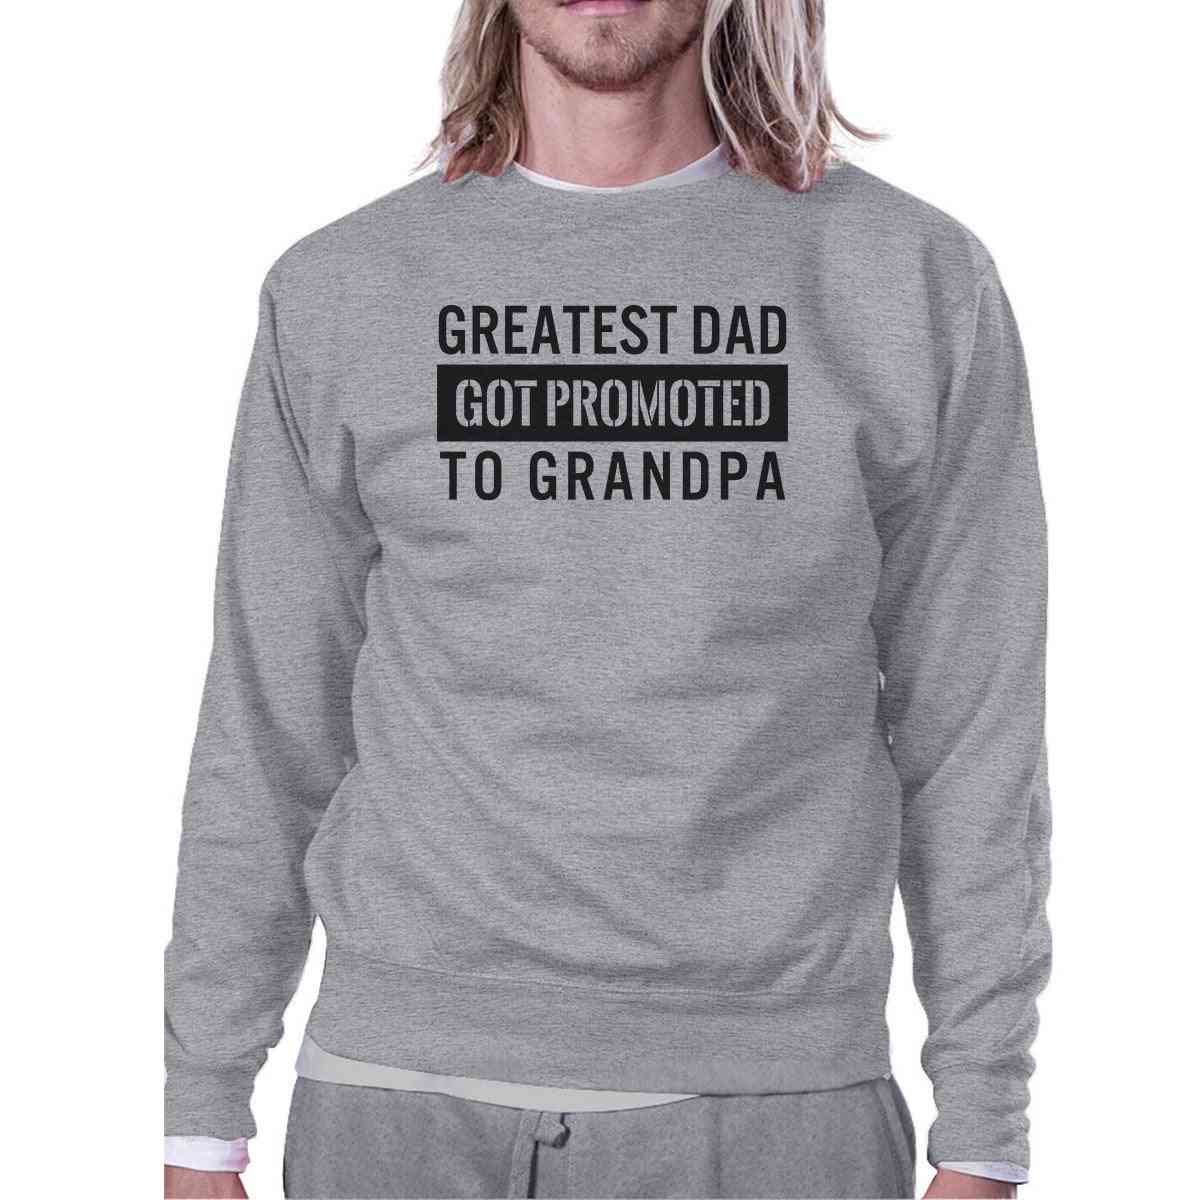 Promoted To Grandpa Sweatshirt